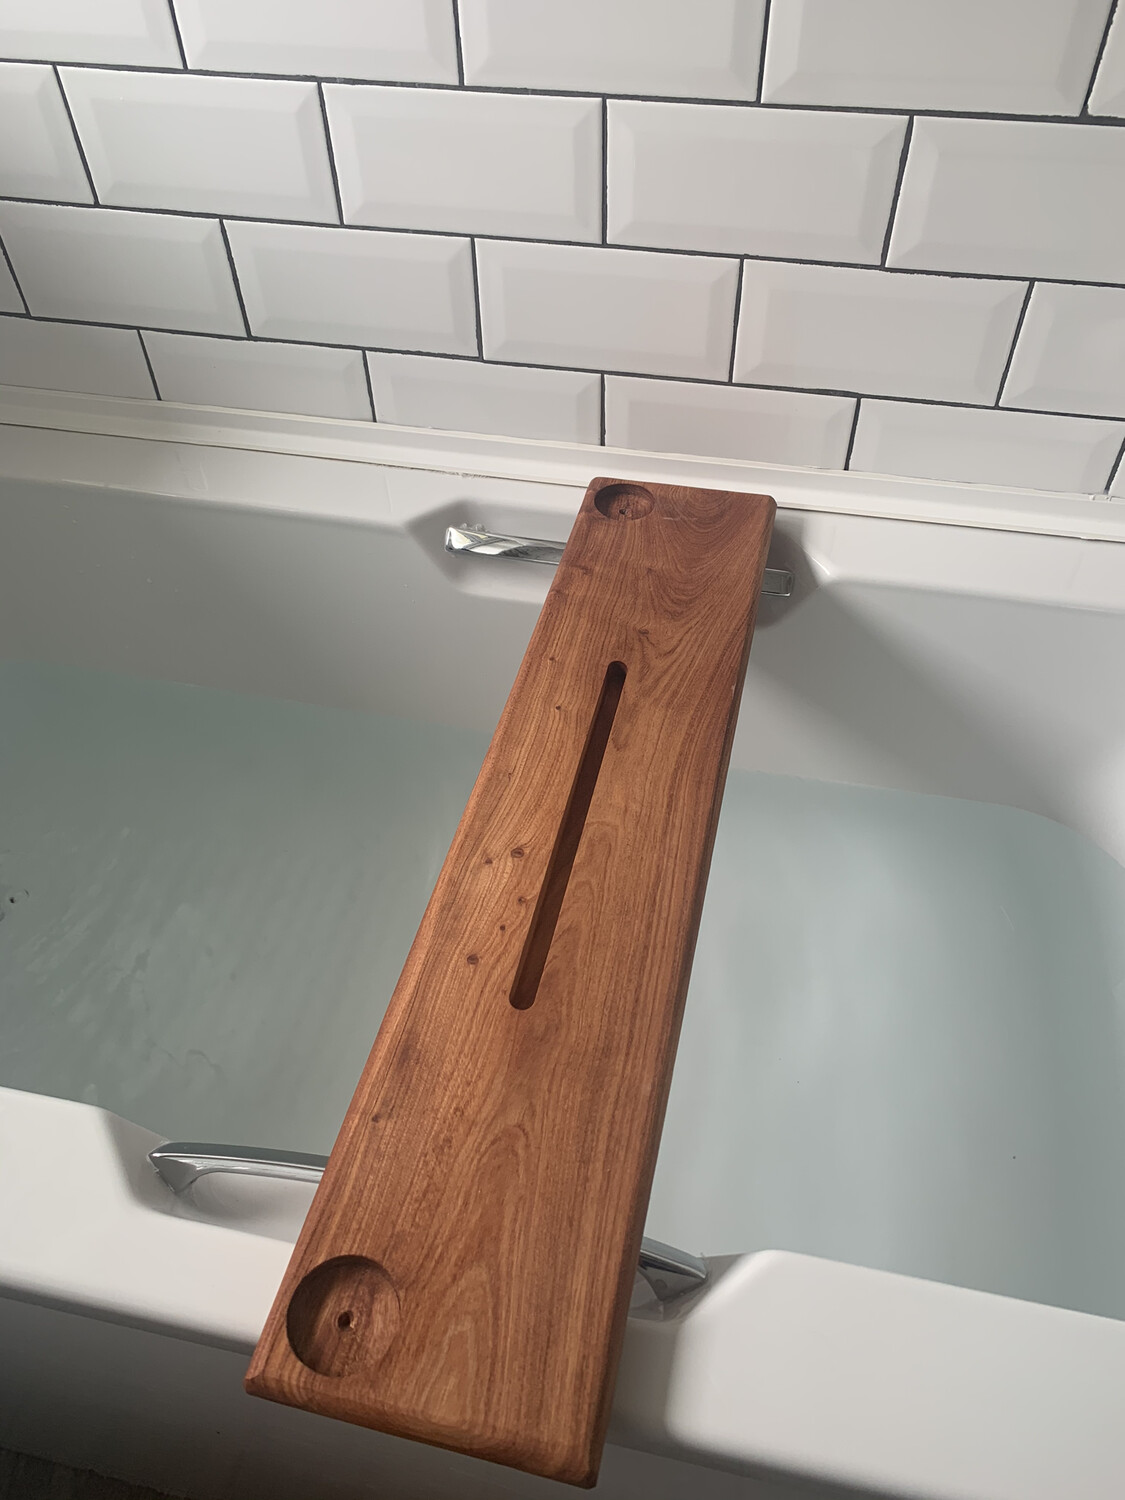 Bespoke Luxury Solid Rosewood Rustic Bath Caddy Tray Tablet Holder